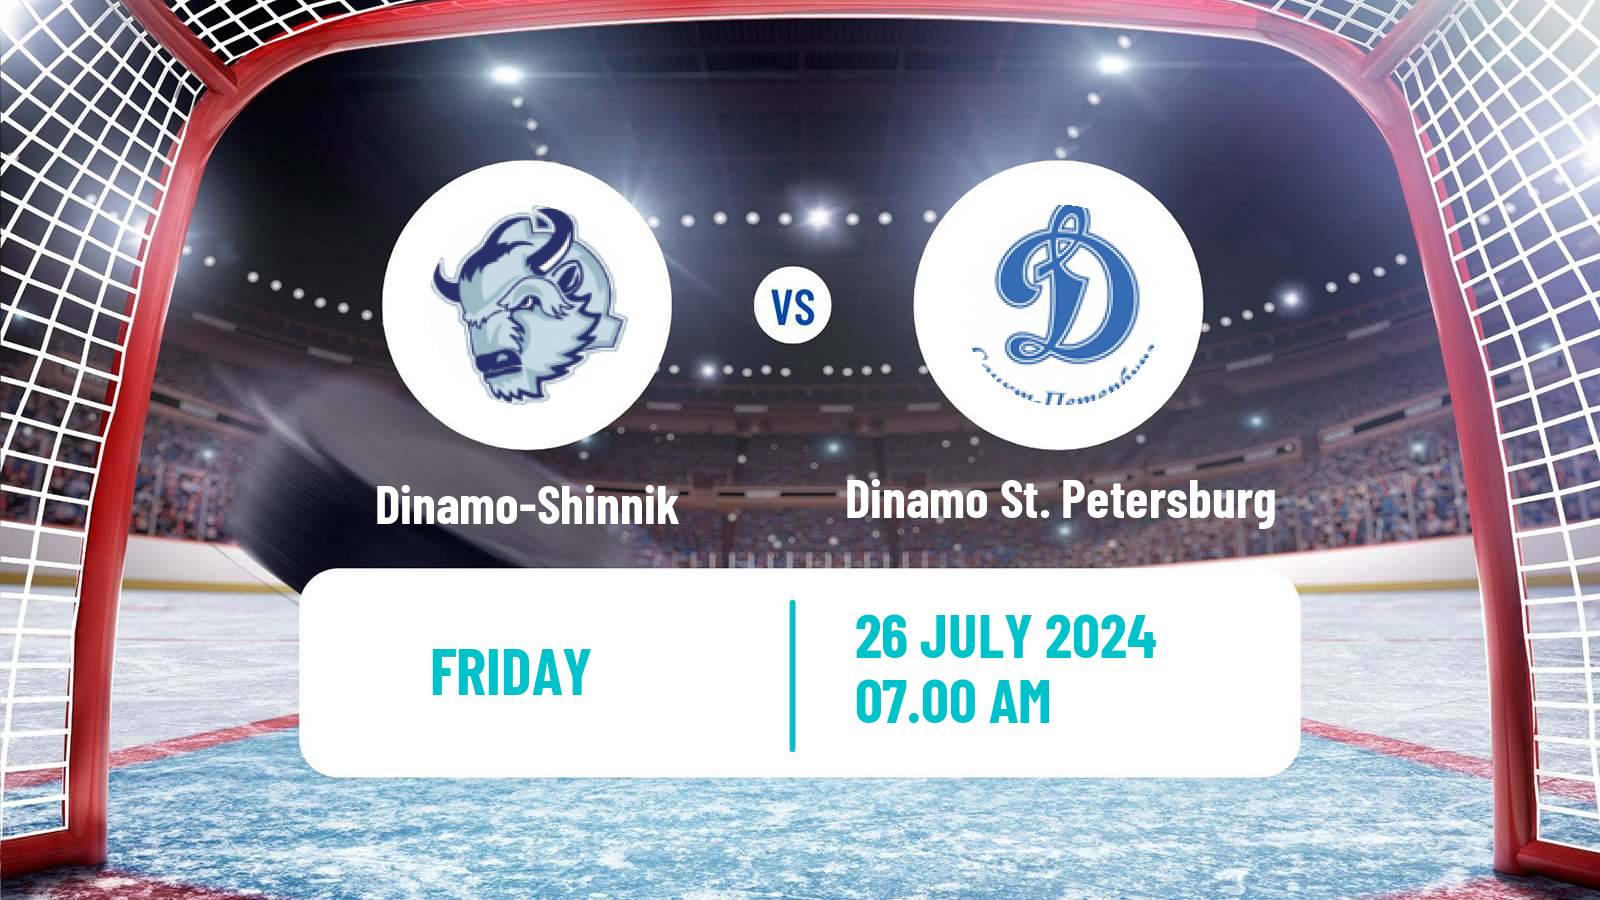 Hockey Club Friendly Ice Hockey Dinamo-Shinnik - Dinamo St. Petersburg